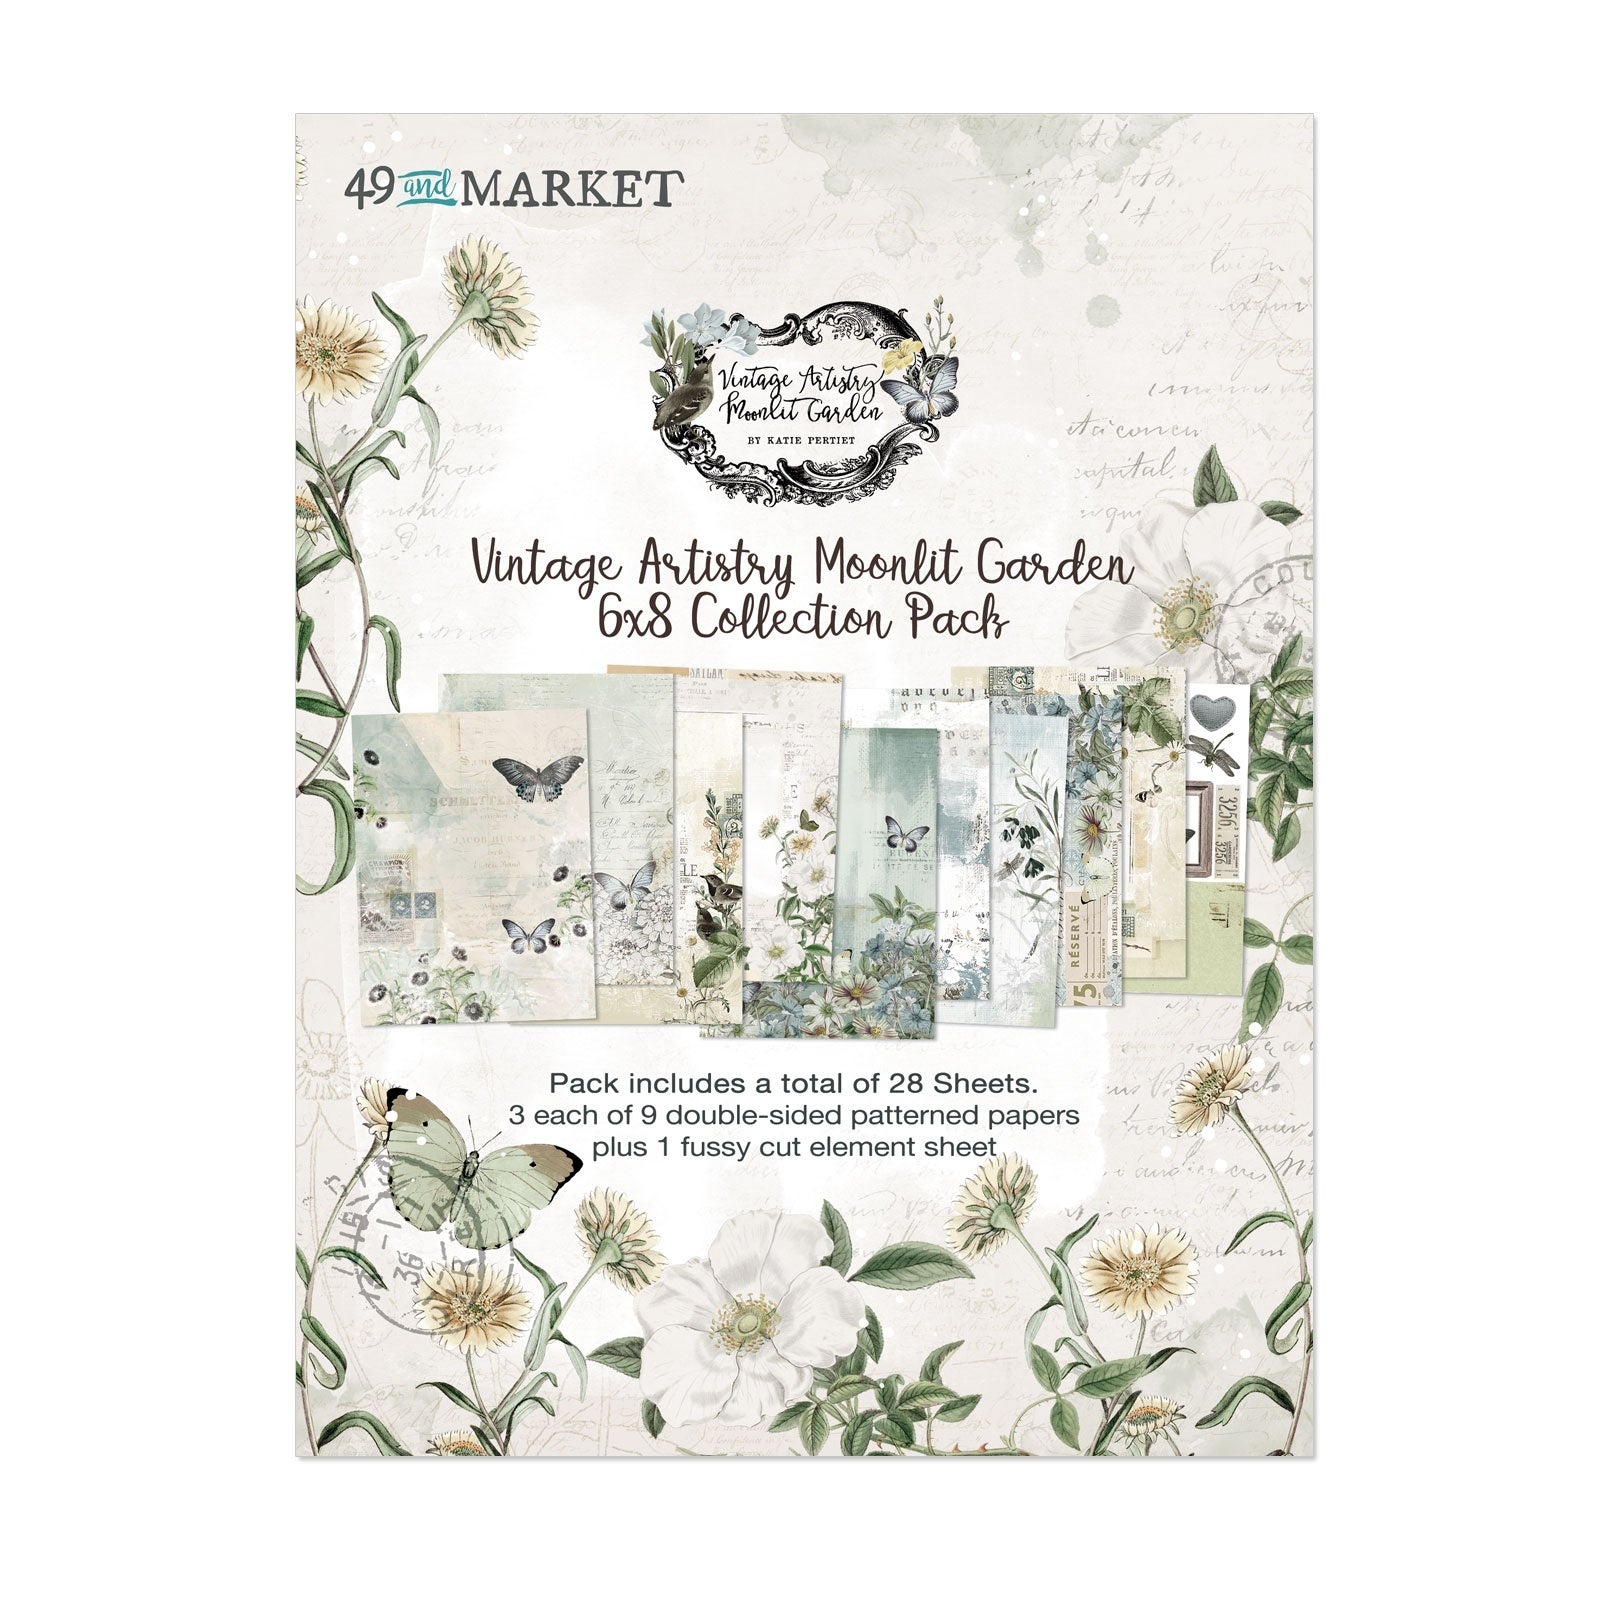 49 & Market  Moonlit Garden Vintage Artistry Moonlit 6 x 8 Collection pack